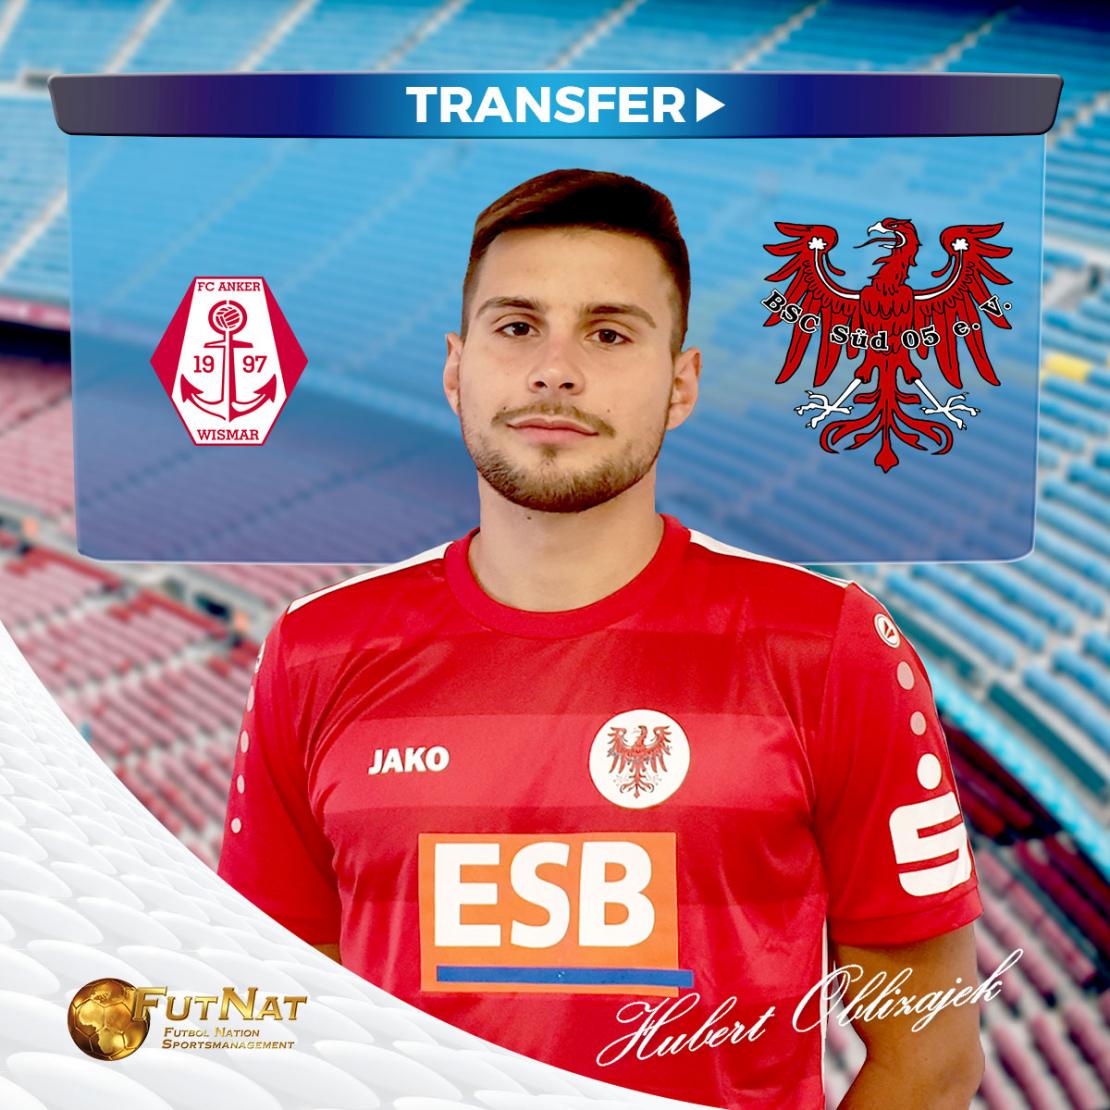 Hubert Oblizajek transfered from FC Anker Wismar to Brandenburg SC S&uuml;d 05